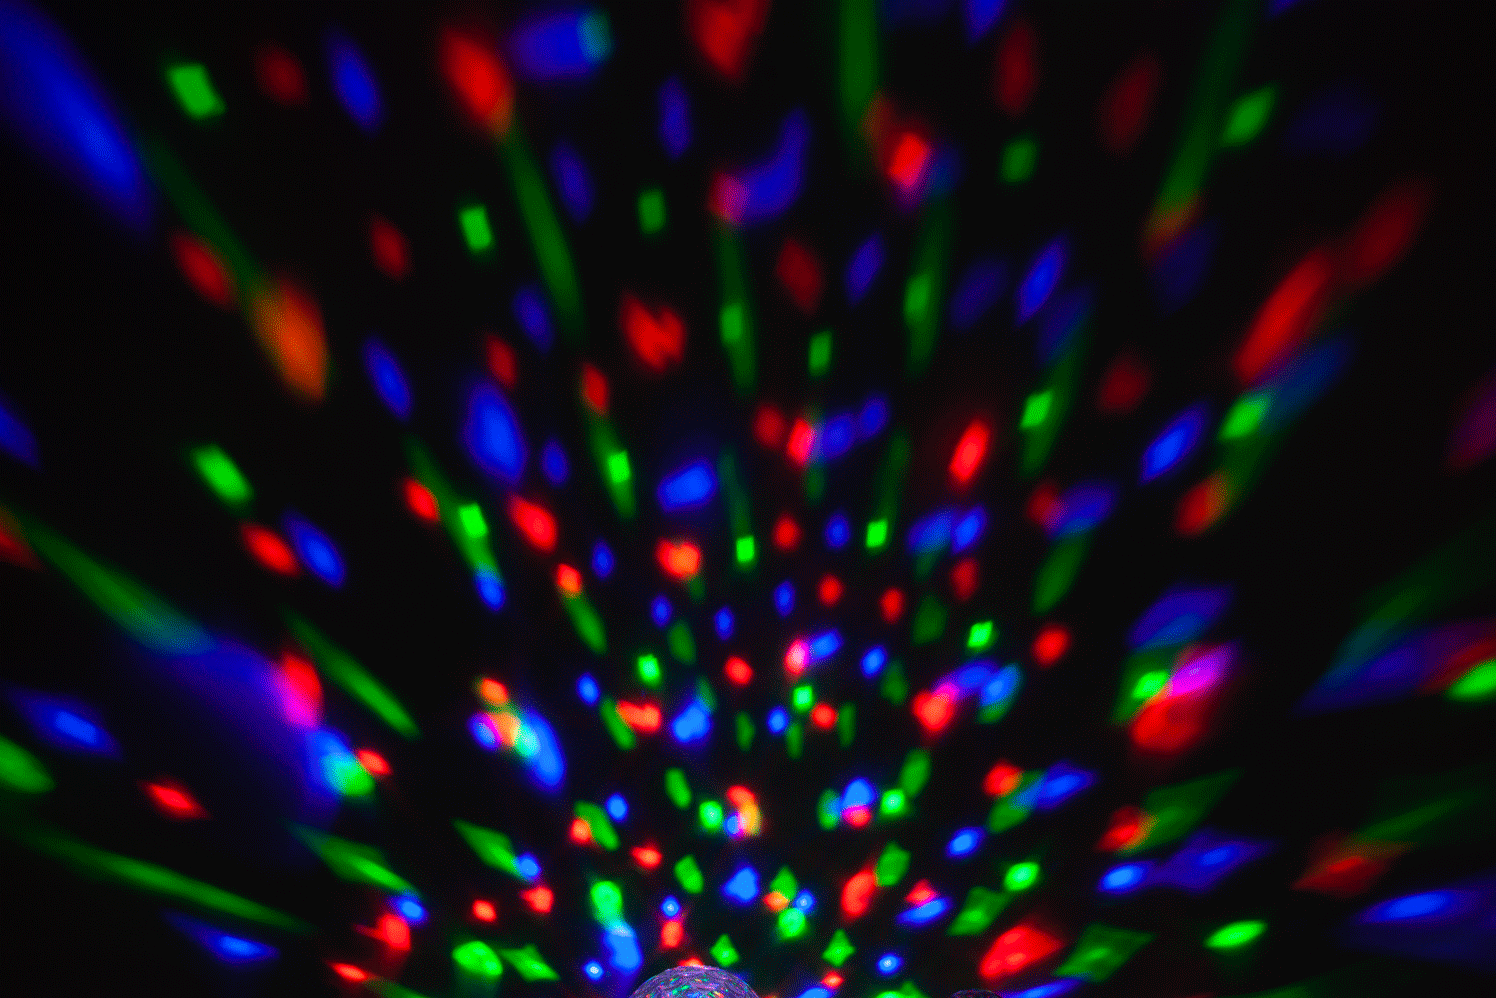 Ibiza Combi FX2 LED lyseffekt